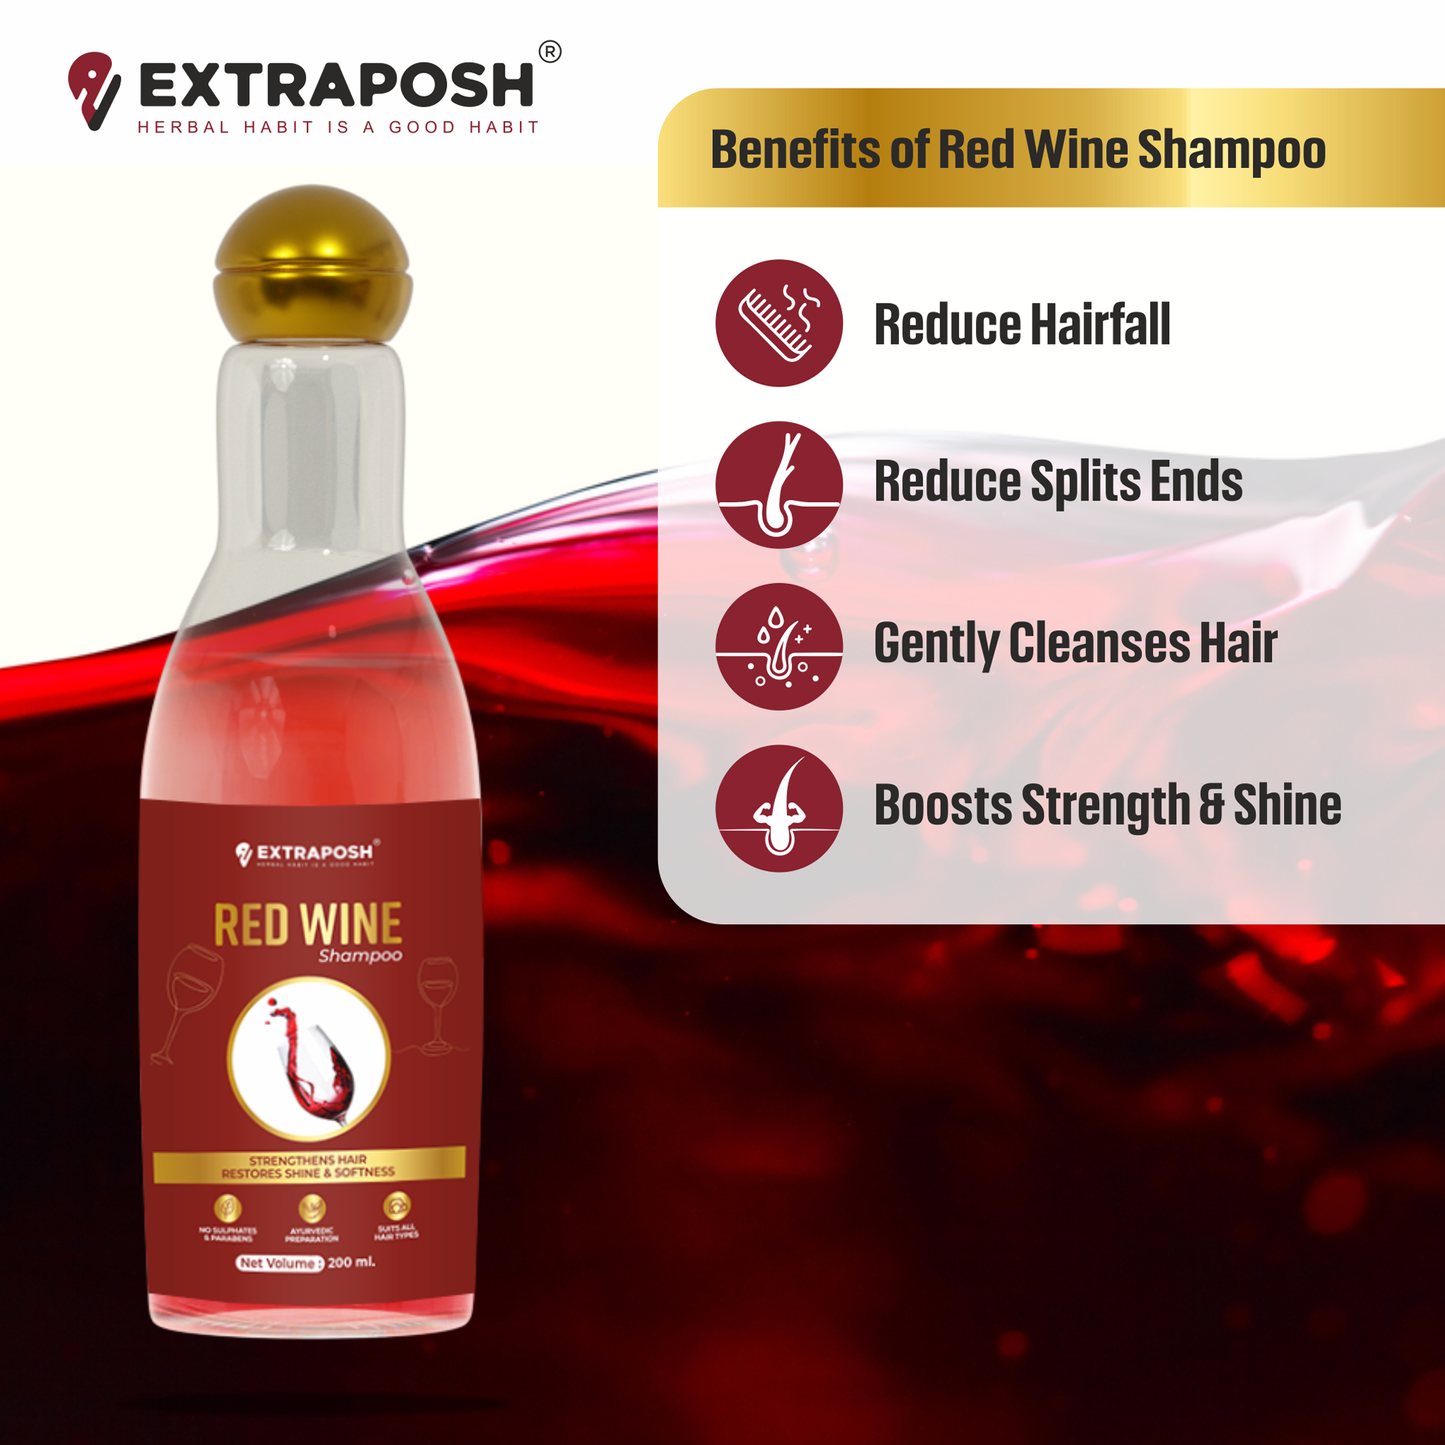 EXTRAPOSH RED WINE SHAMPOO